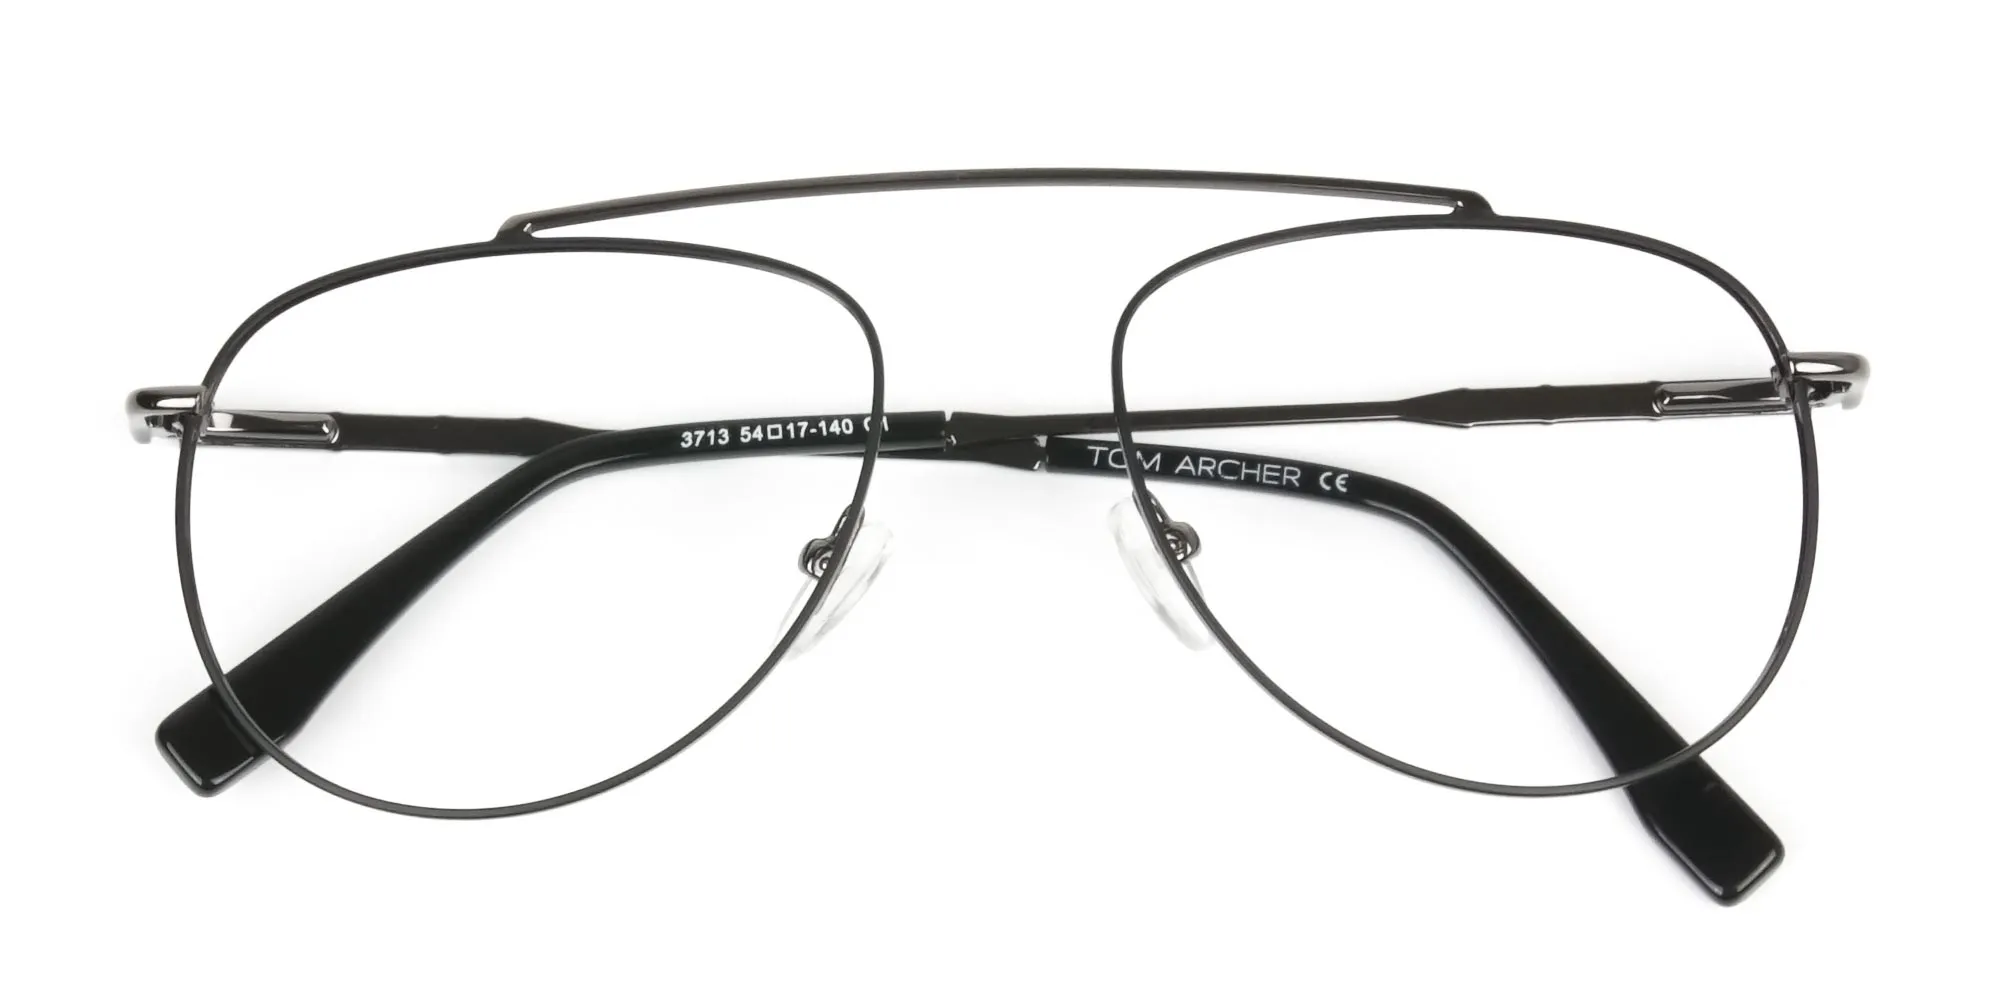 Silver & Dark Navy Thin Metal Pilot Frame Glasses - 2